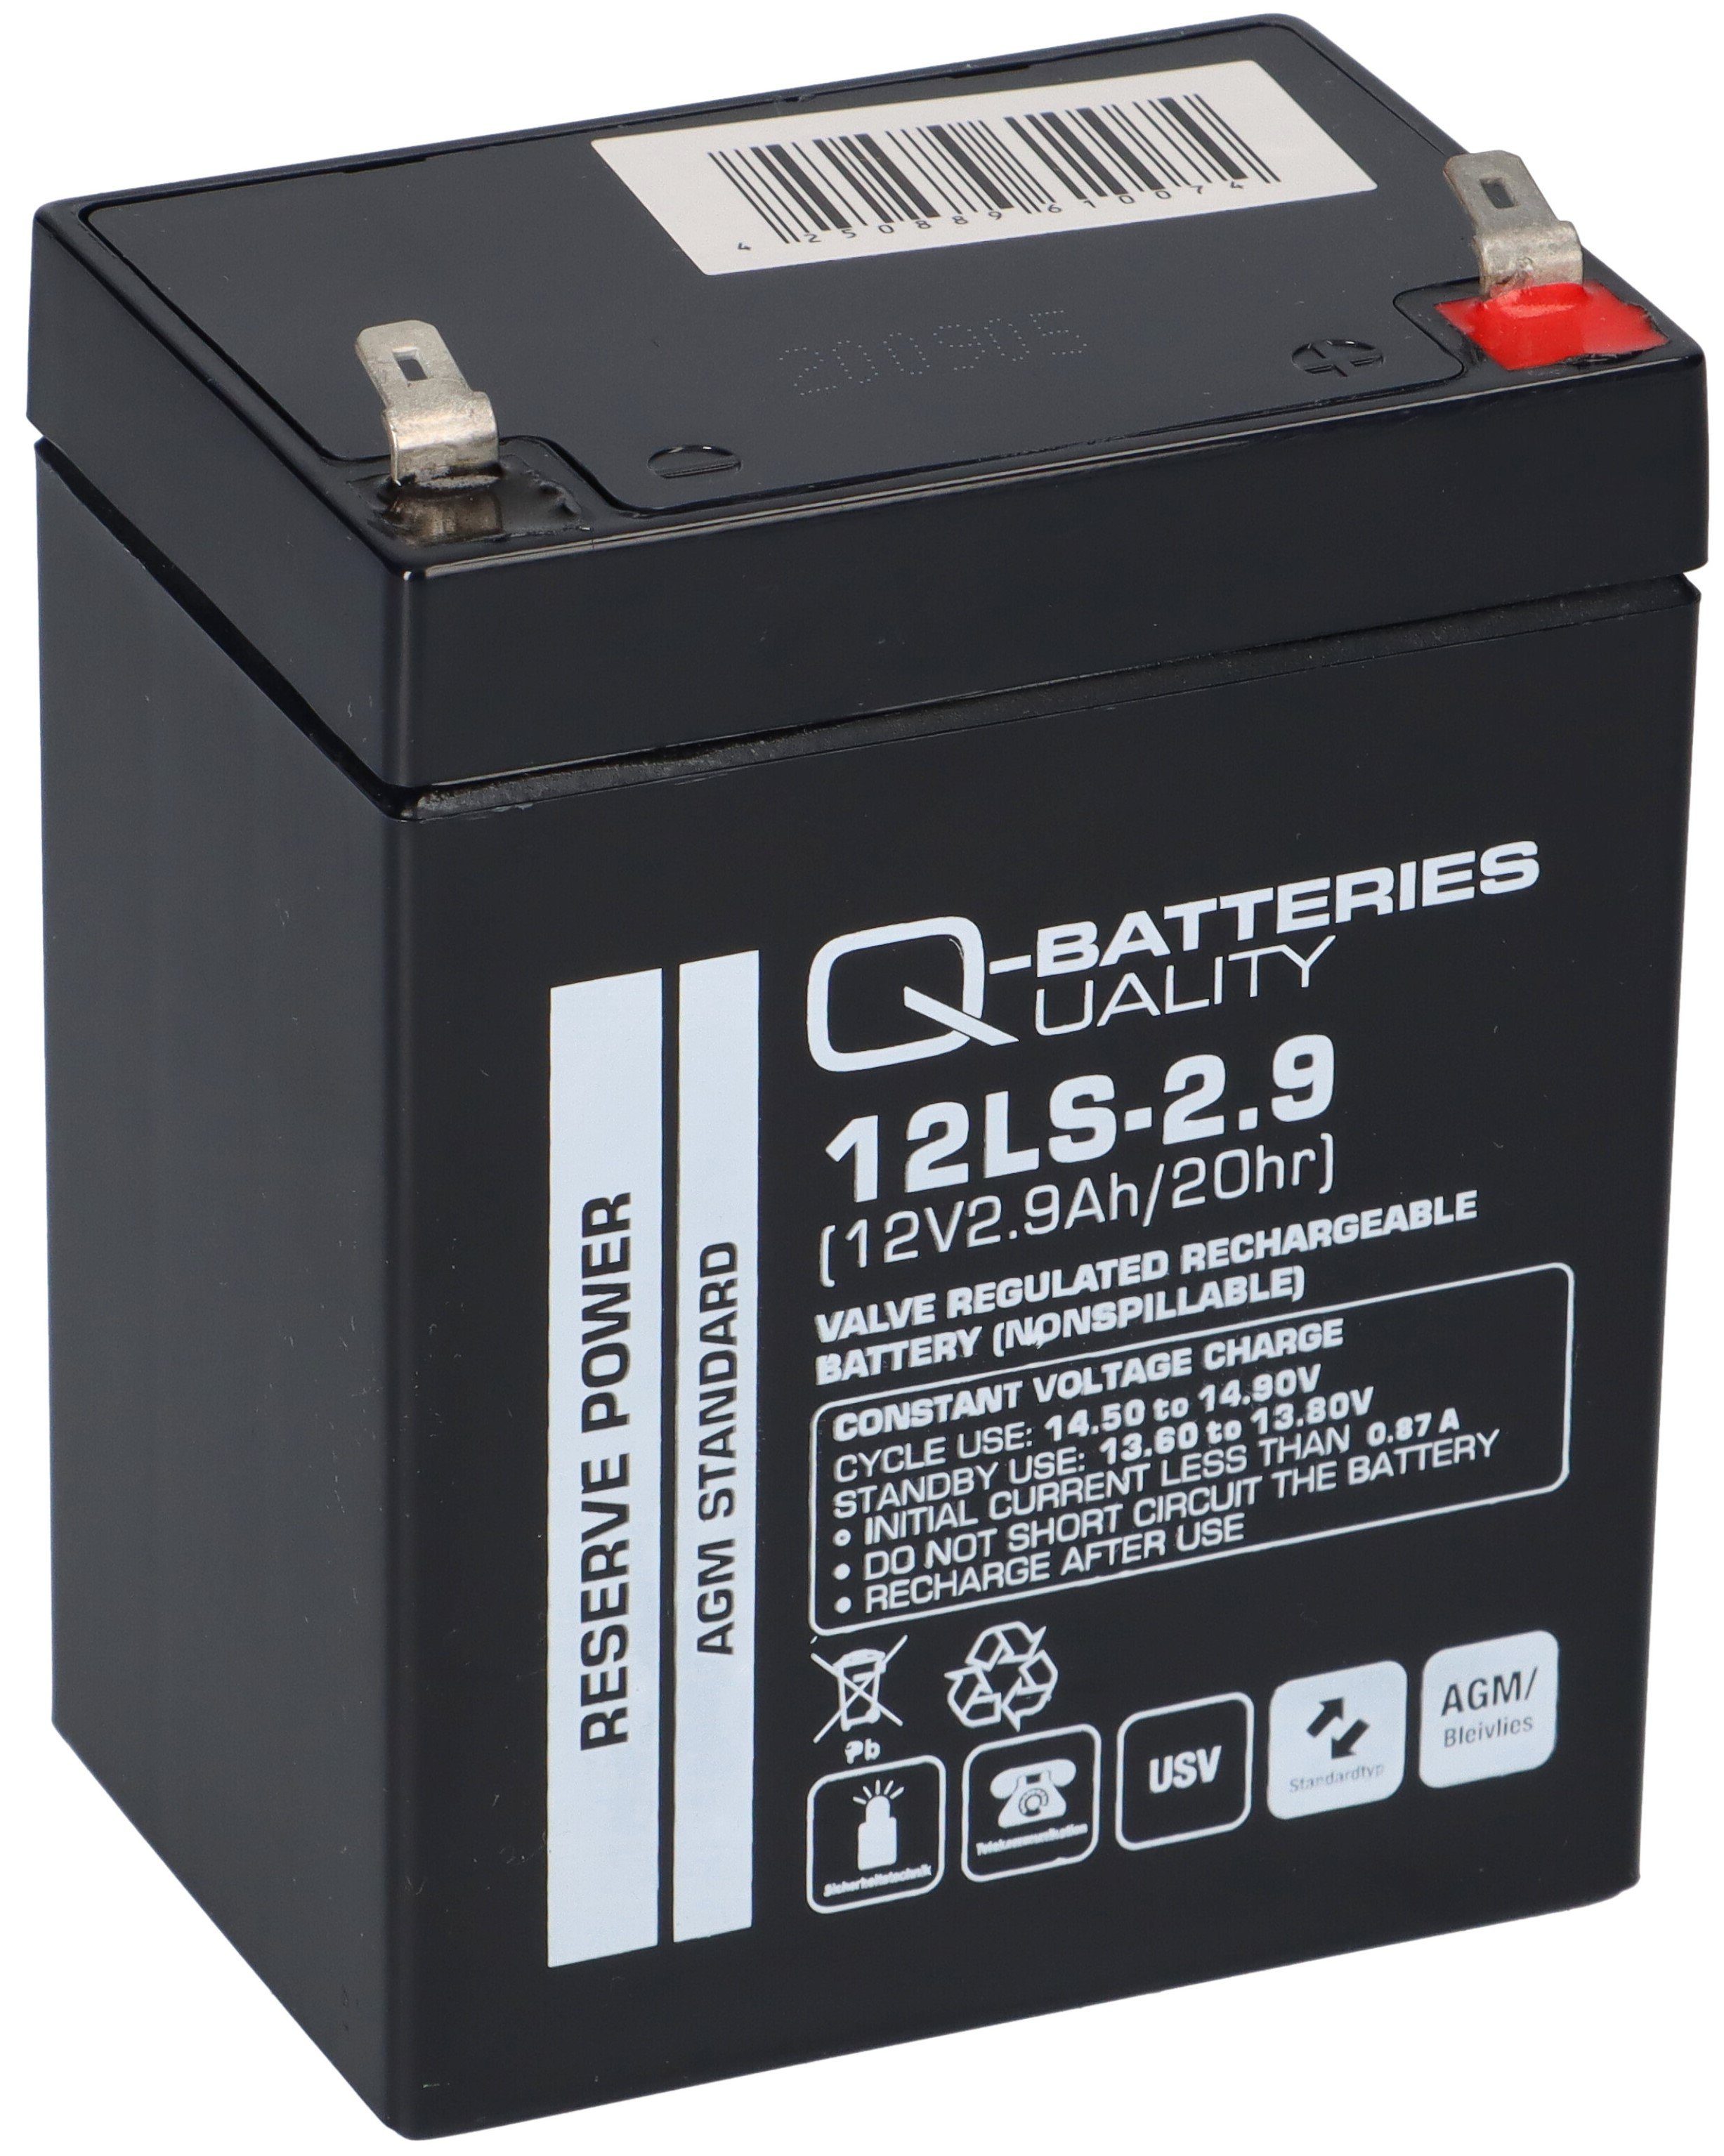 Q-Batteries Q-Batteries 12LS-2.9 12V 2,9Ah Blei-Vlies Akku / AGM VRLA Bleiakkus